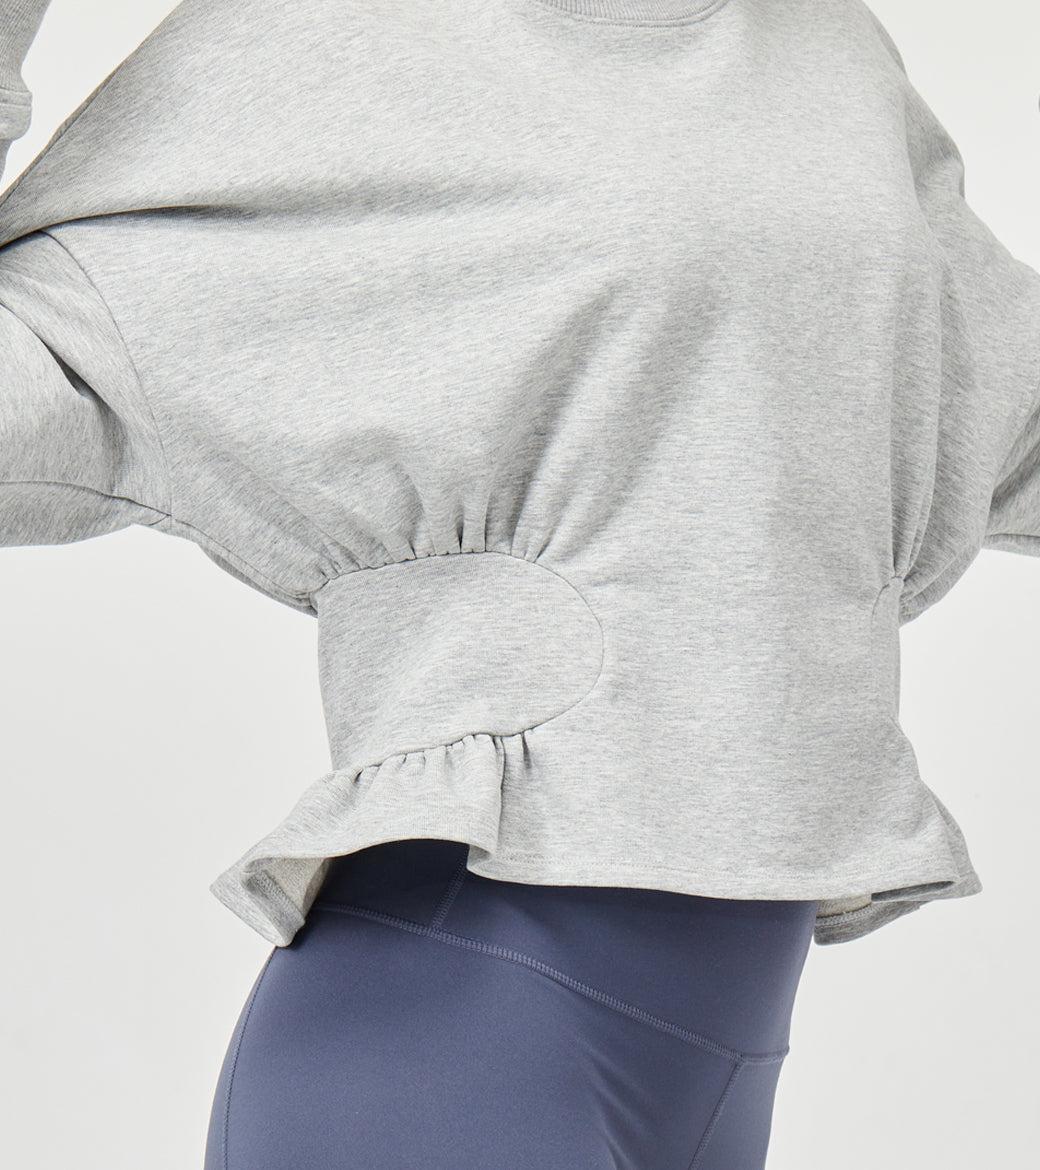 LOVESOFT Women Light Grey Crew Neck Fashion Self-cultivation Wild Frosted Knitted Sweatshirt